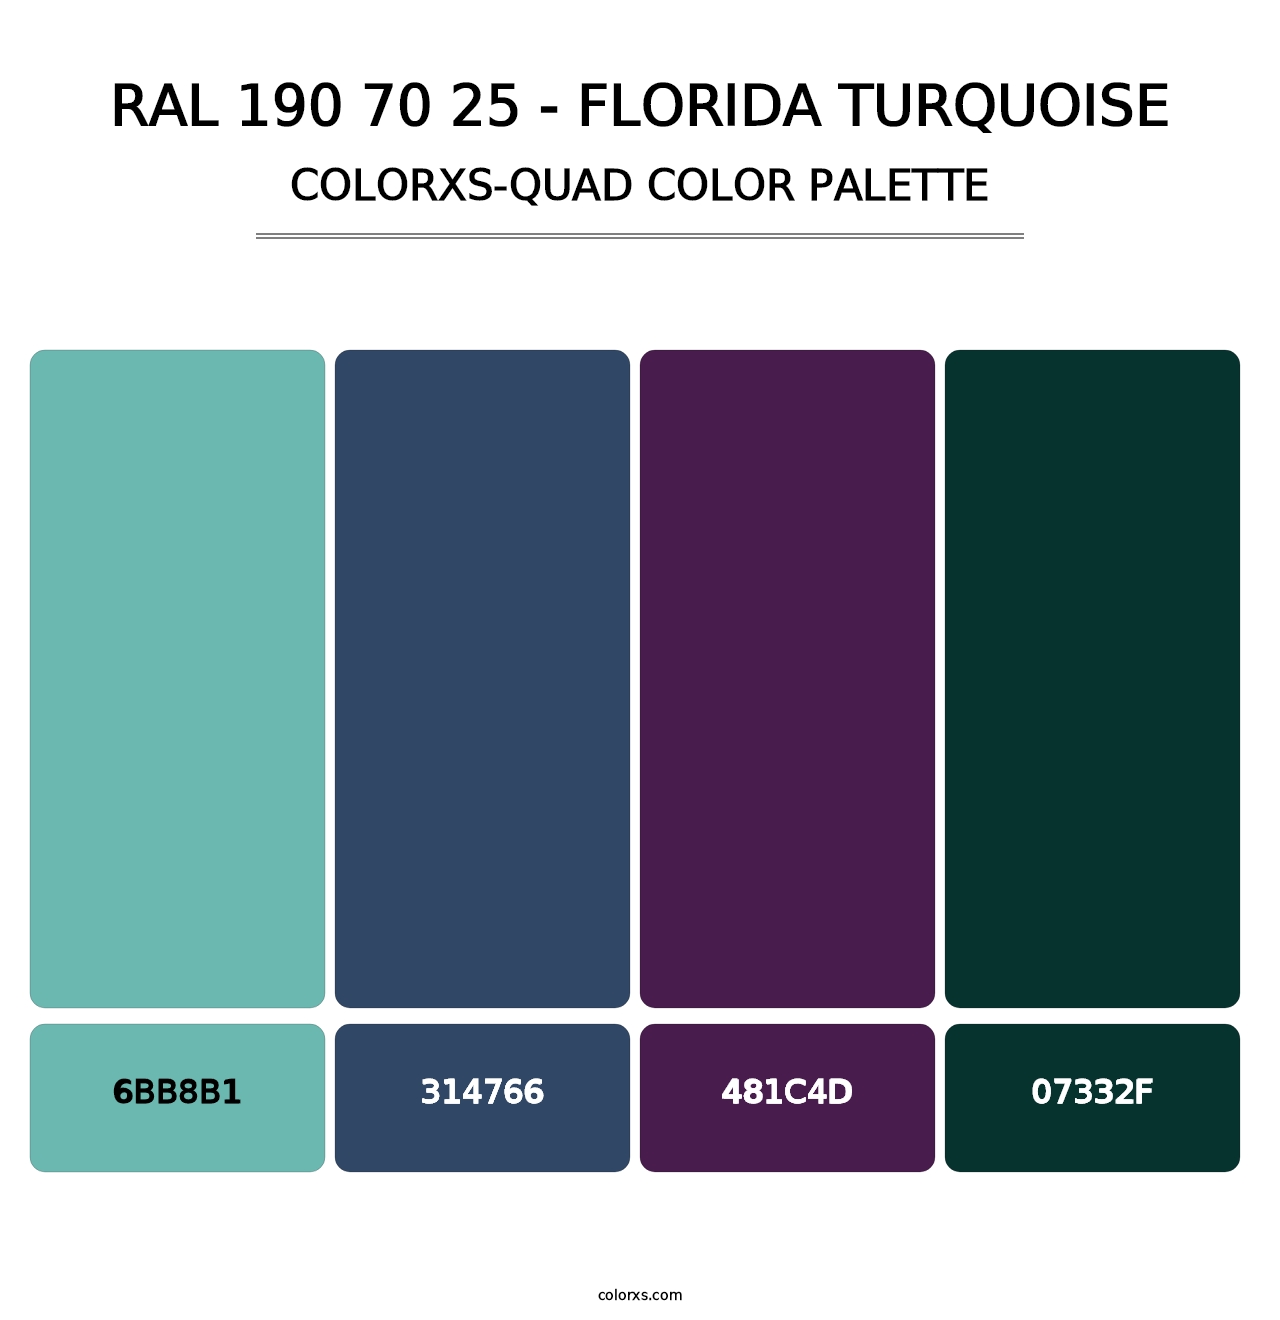 RAL 190 70 25 - Florida Turquoise - Colorxs Quad Palette